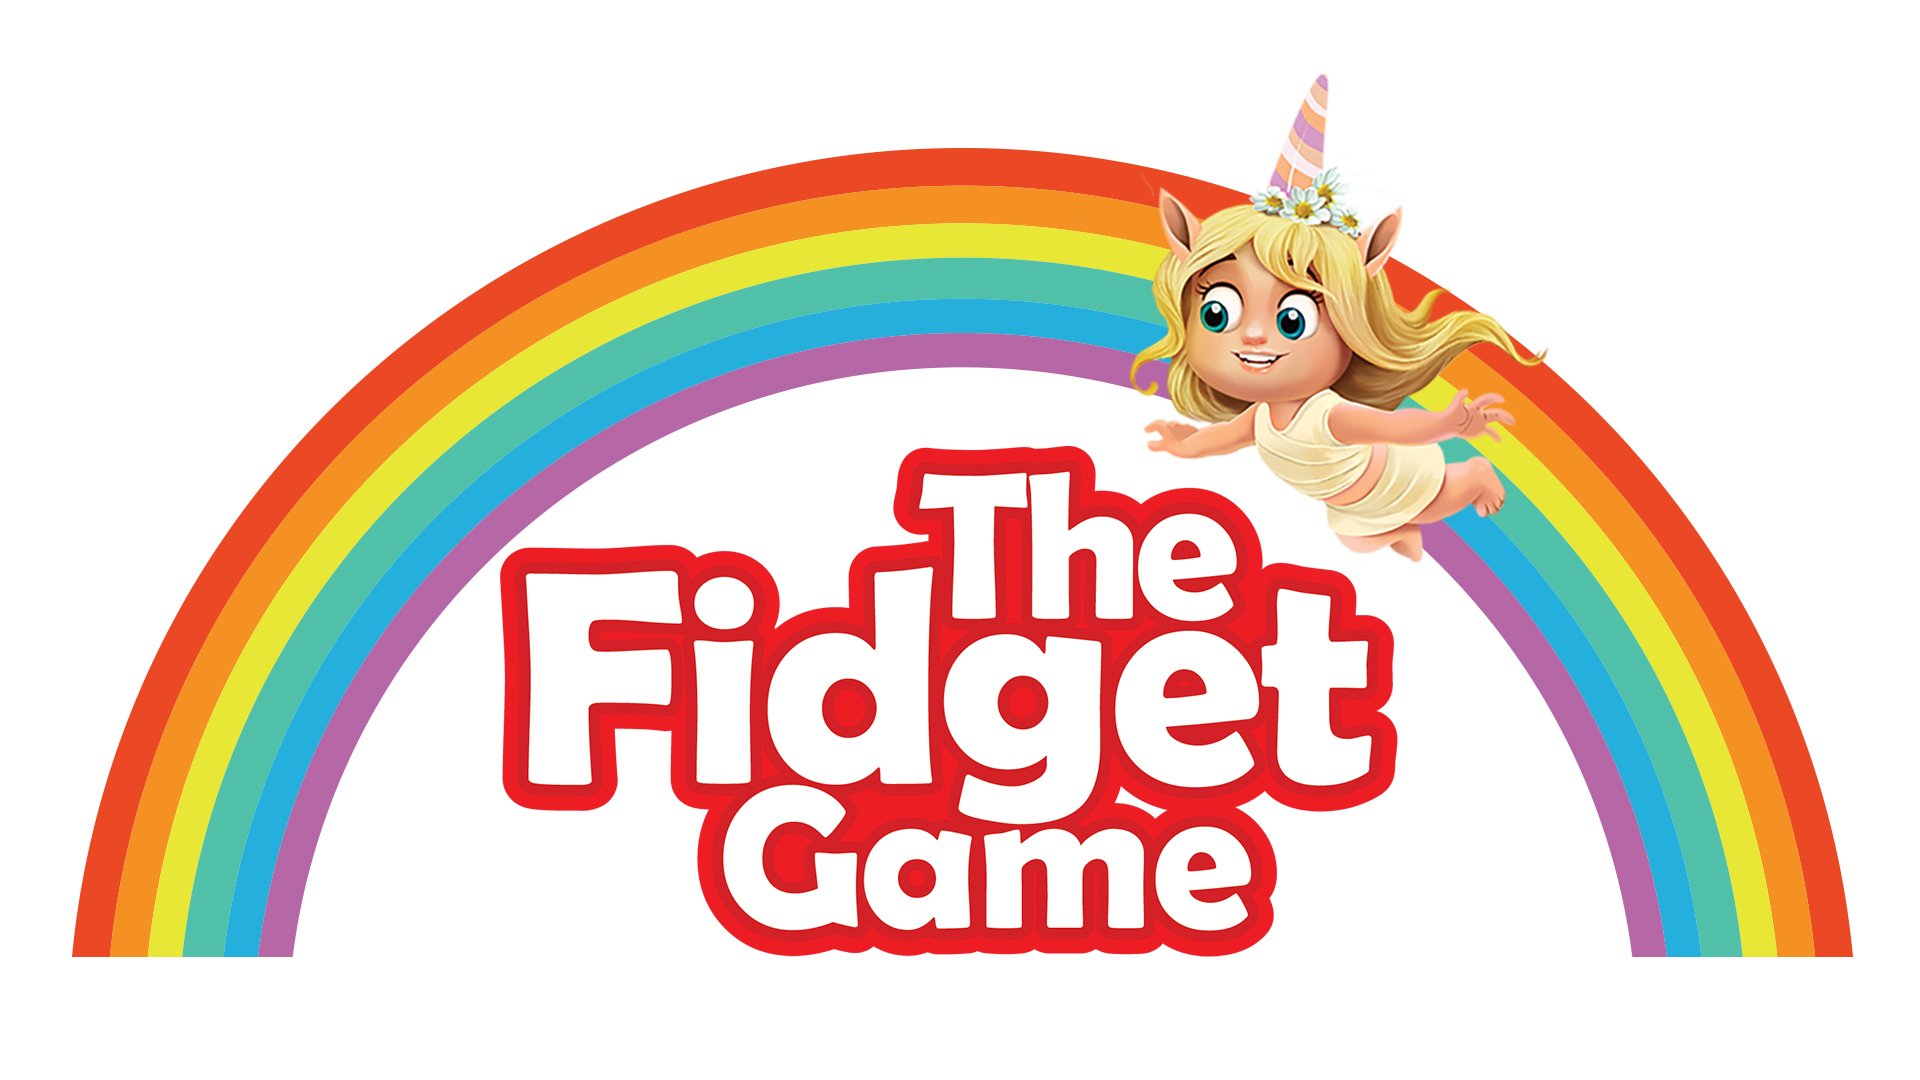 The Fidget Game logo